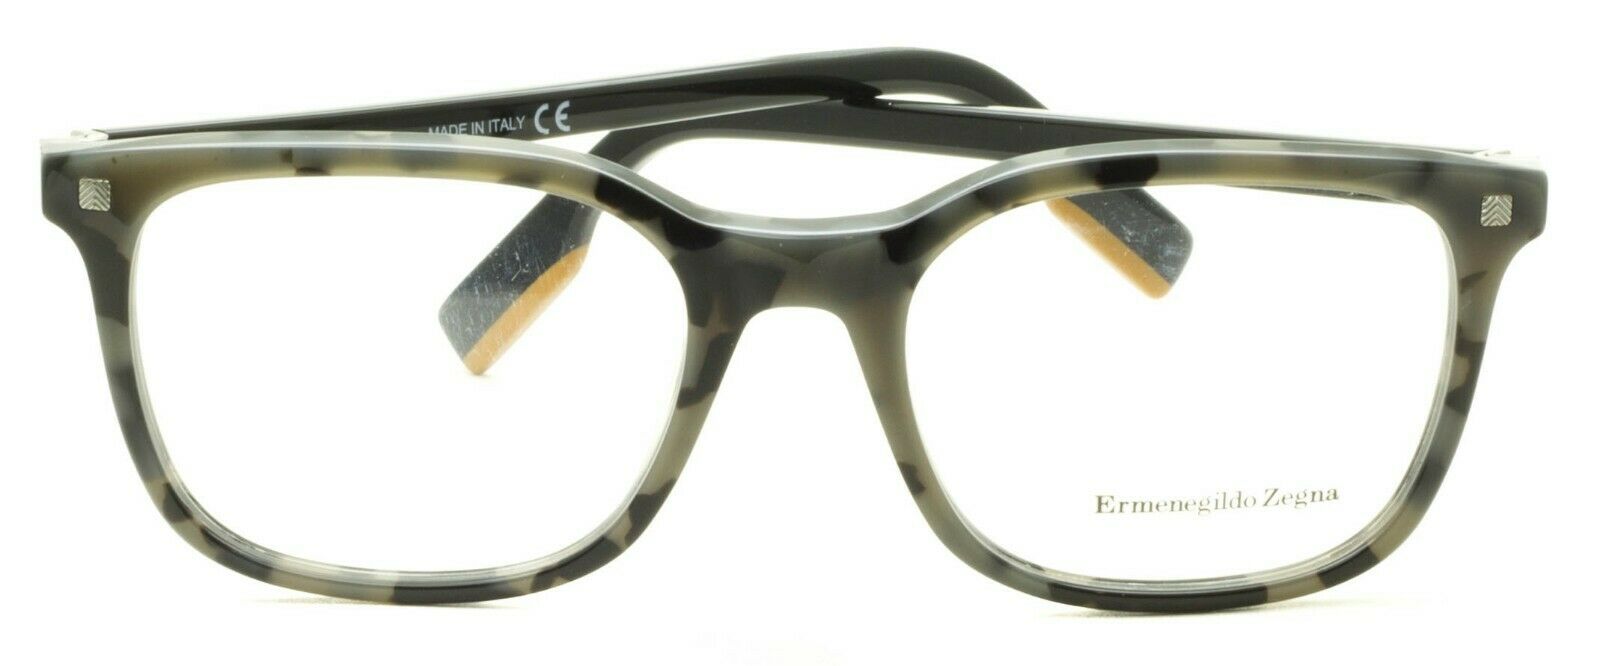 ERMENEGILDO ZEGNA EZ 5121 055 54mm FRAMES Glasses Eyewear RX 